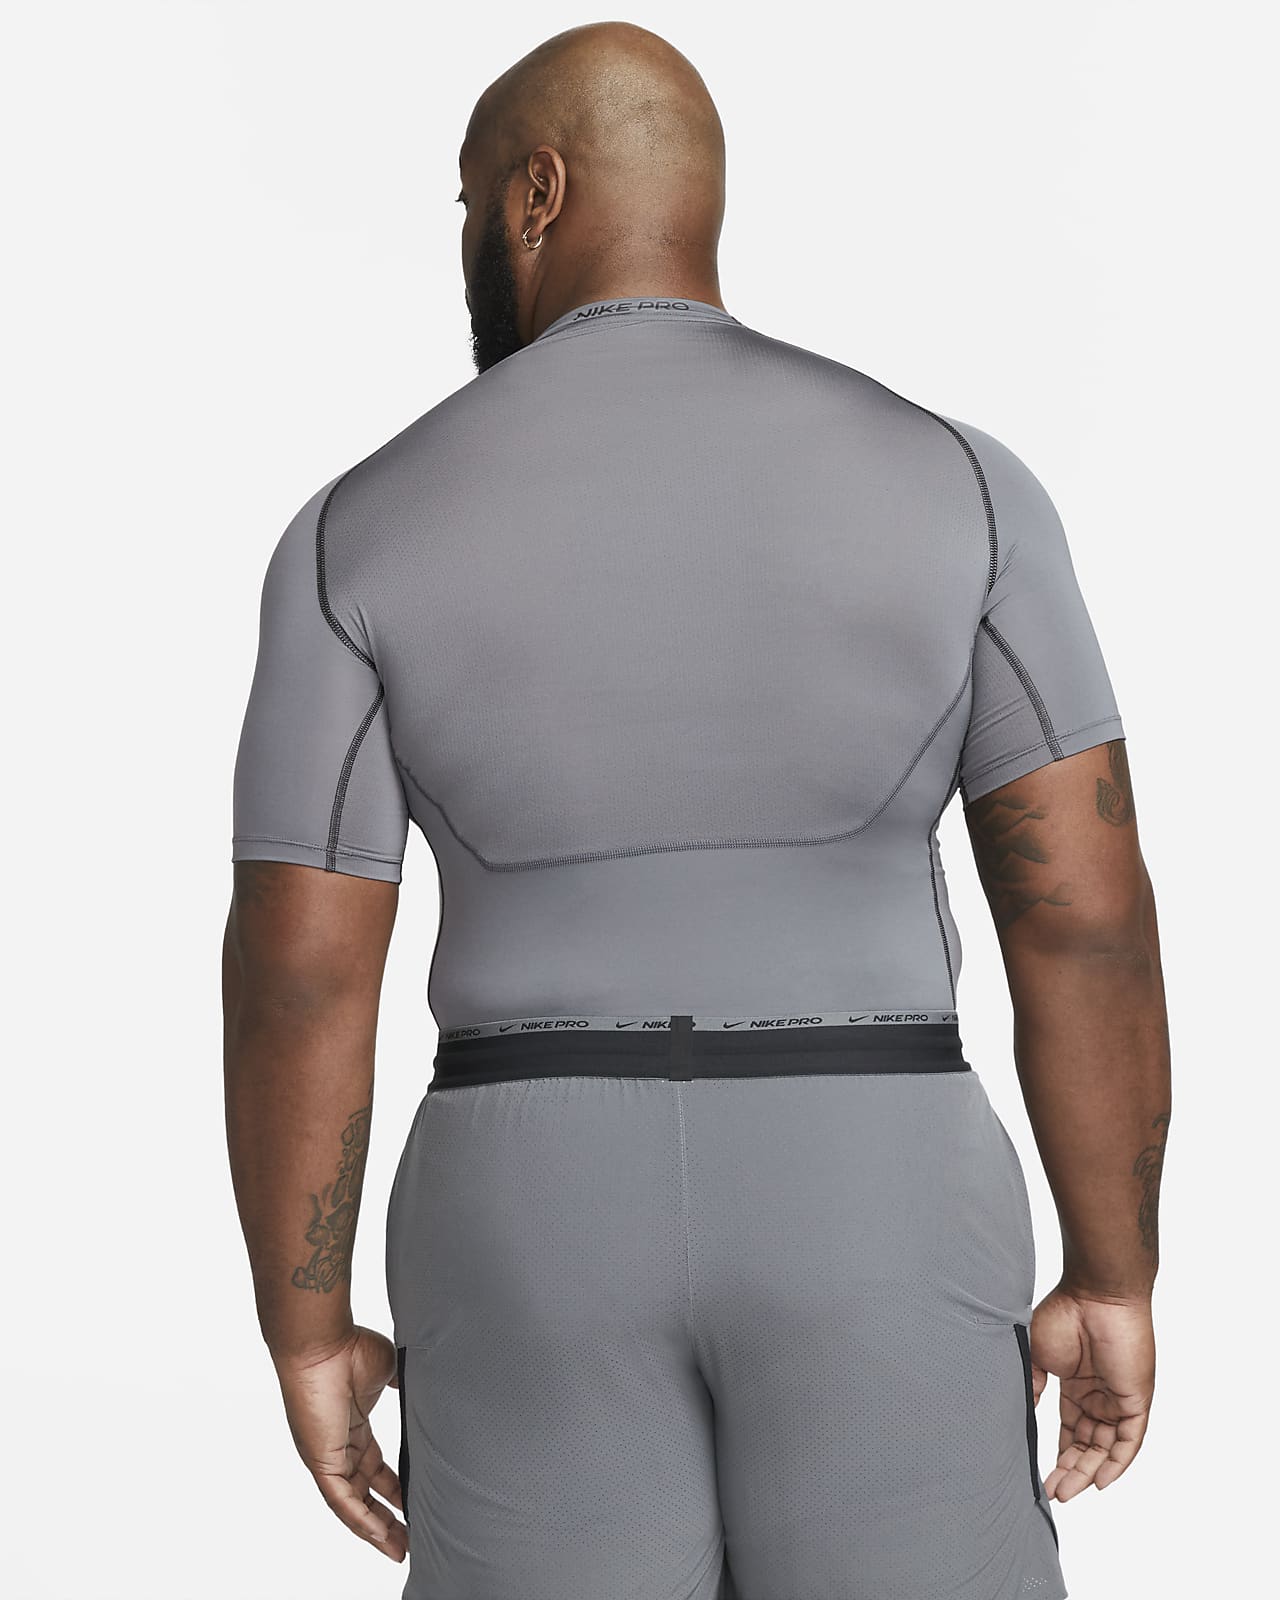 Adelaida caballo de fuerza Subir Nike Pro Dri-FIT Men's Tight Fit Short-Sleeve Top. Nike.com